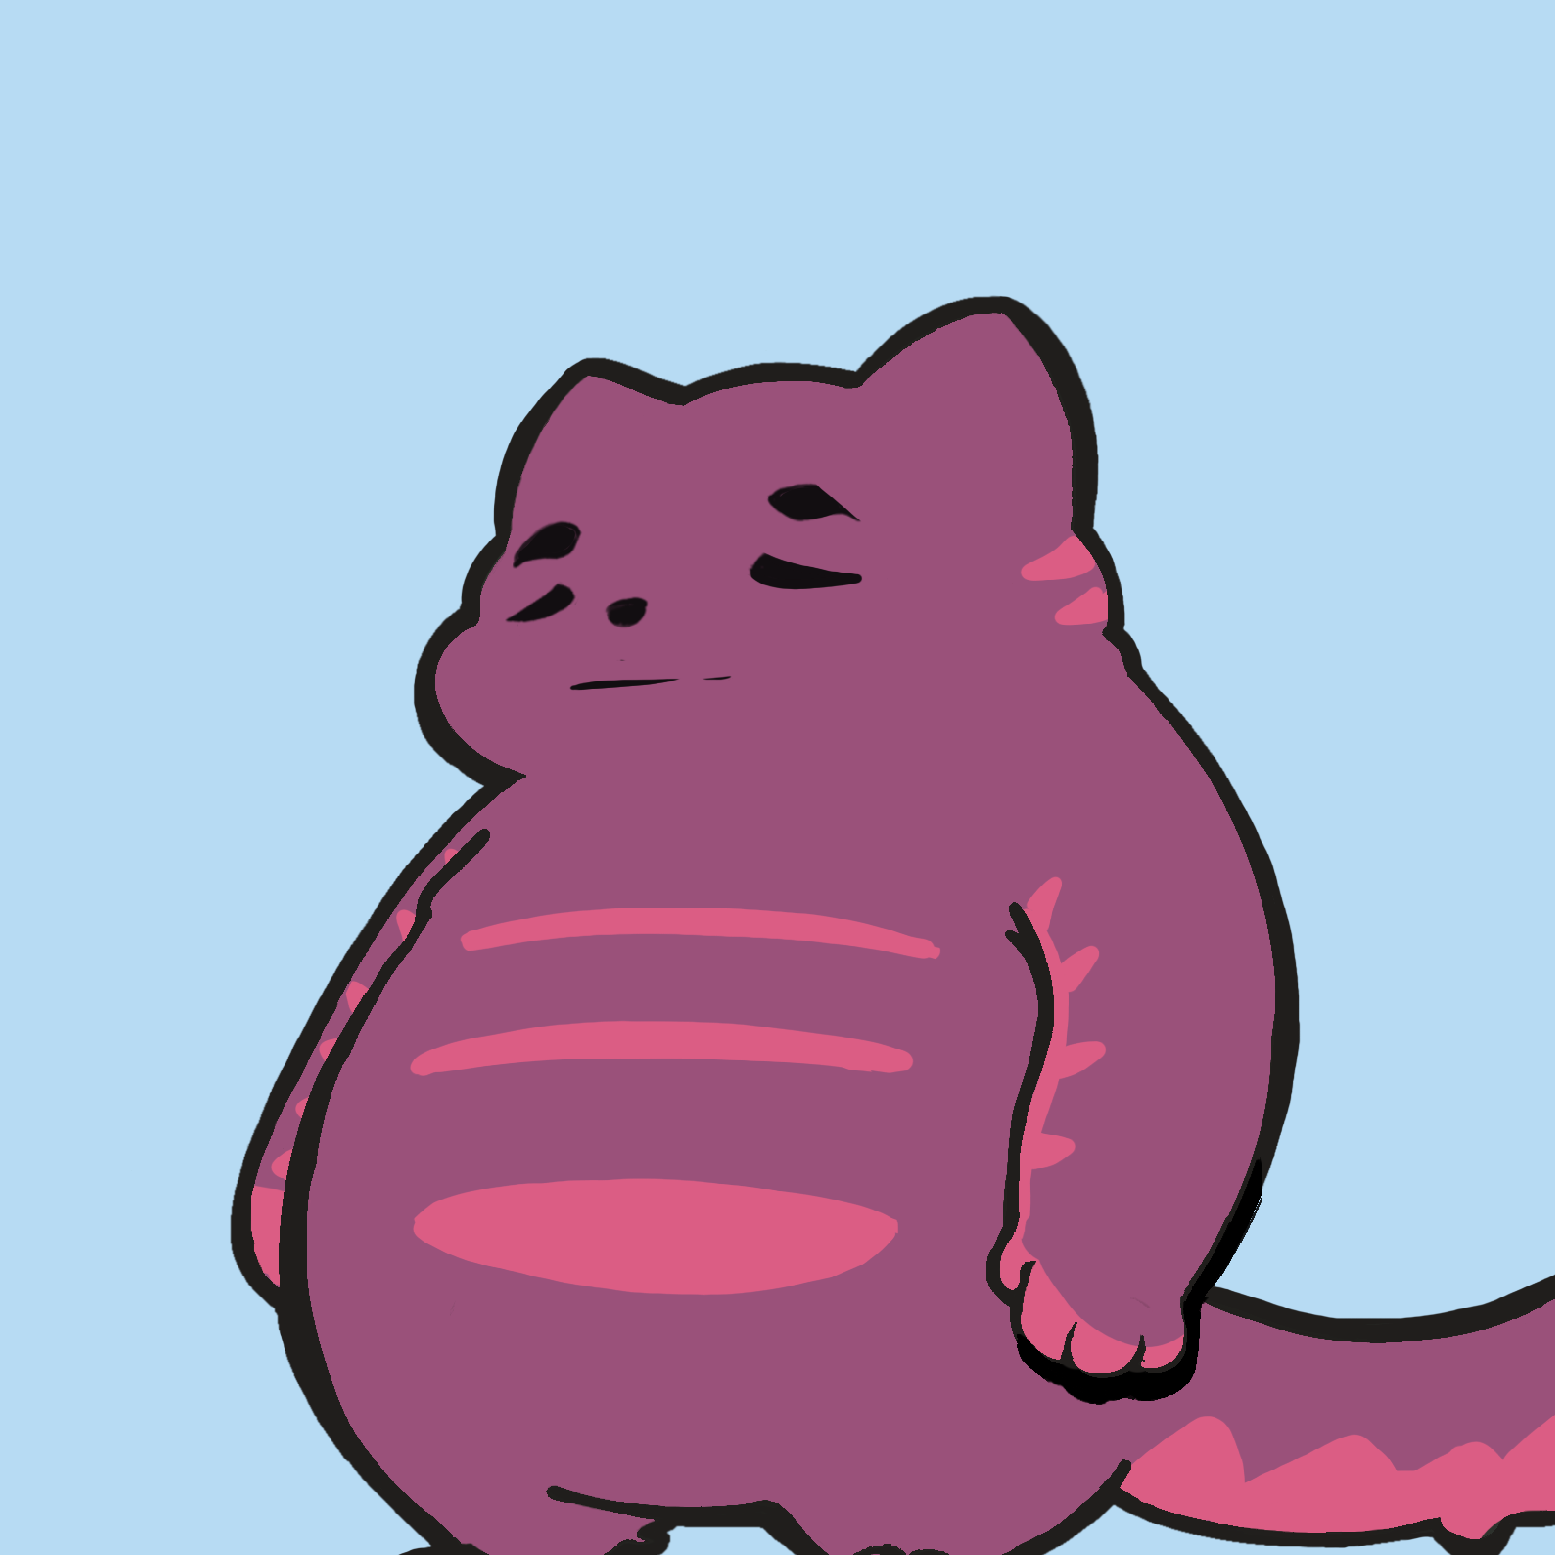 Degen Fat Cat the 7017th